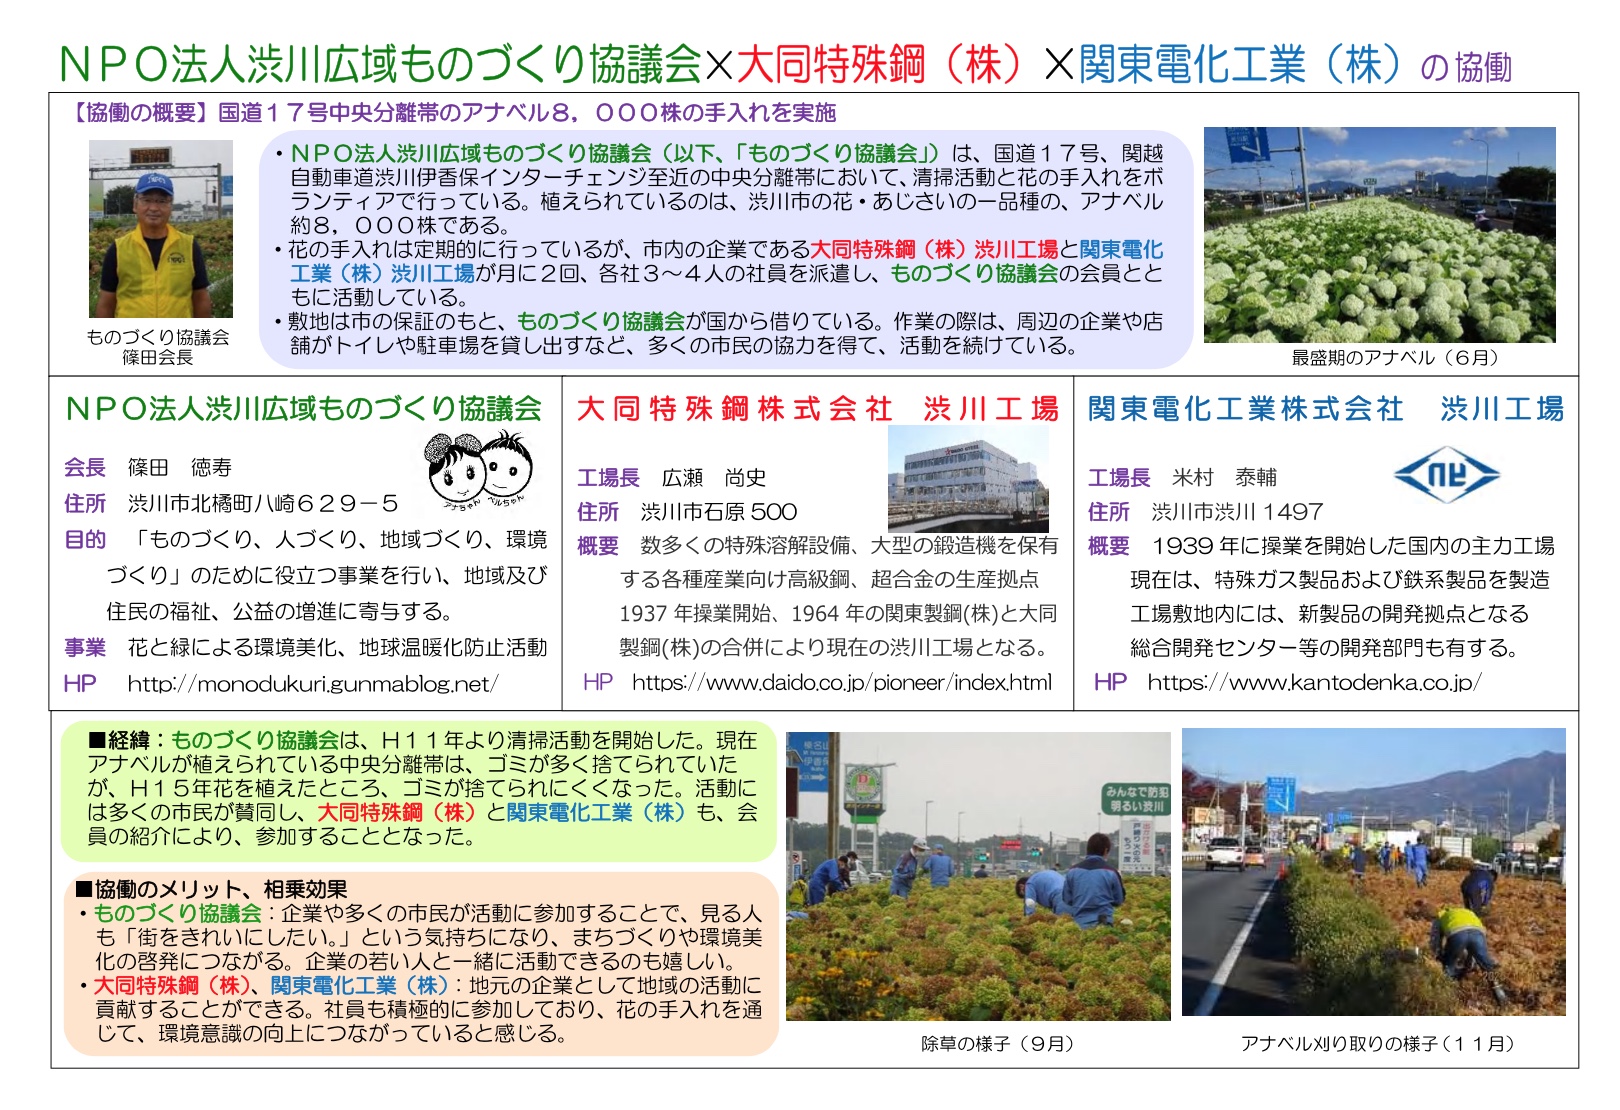 Activities of the NPO Shibukawa Regional Manufacturing Council